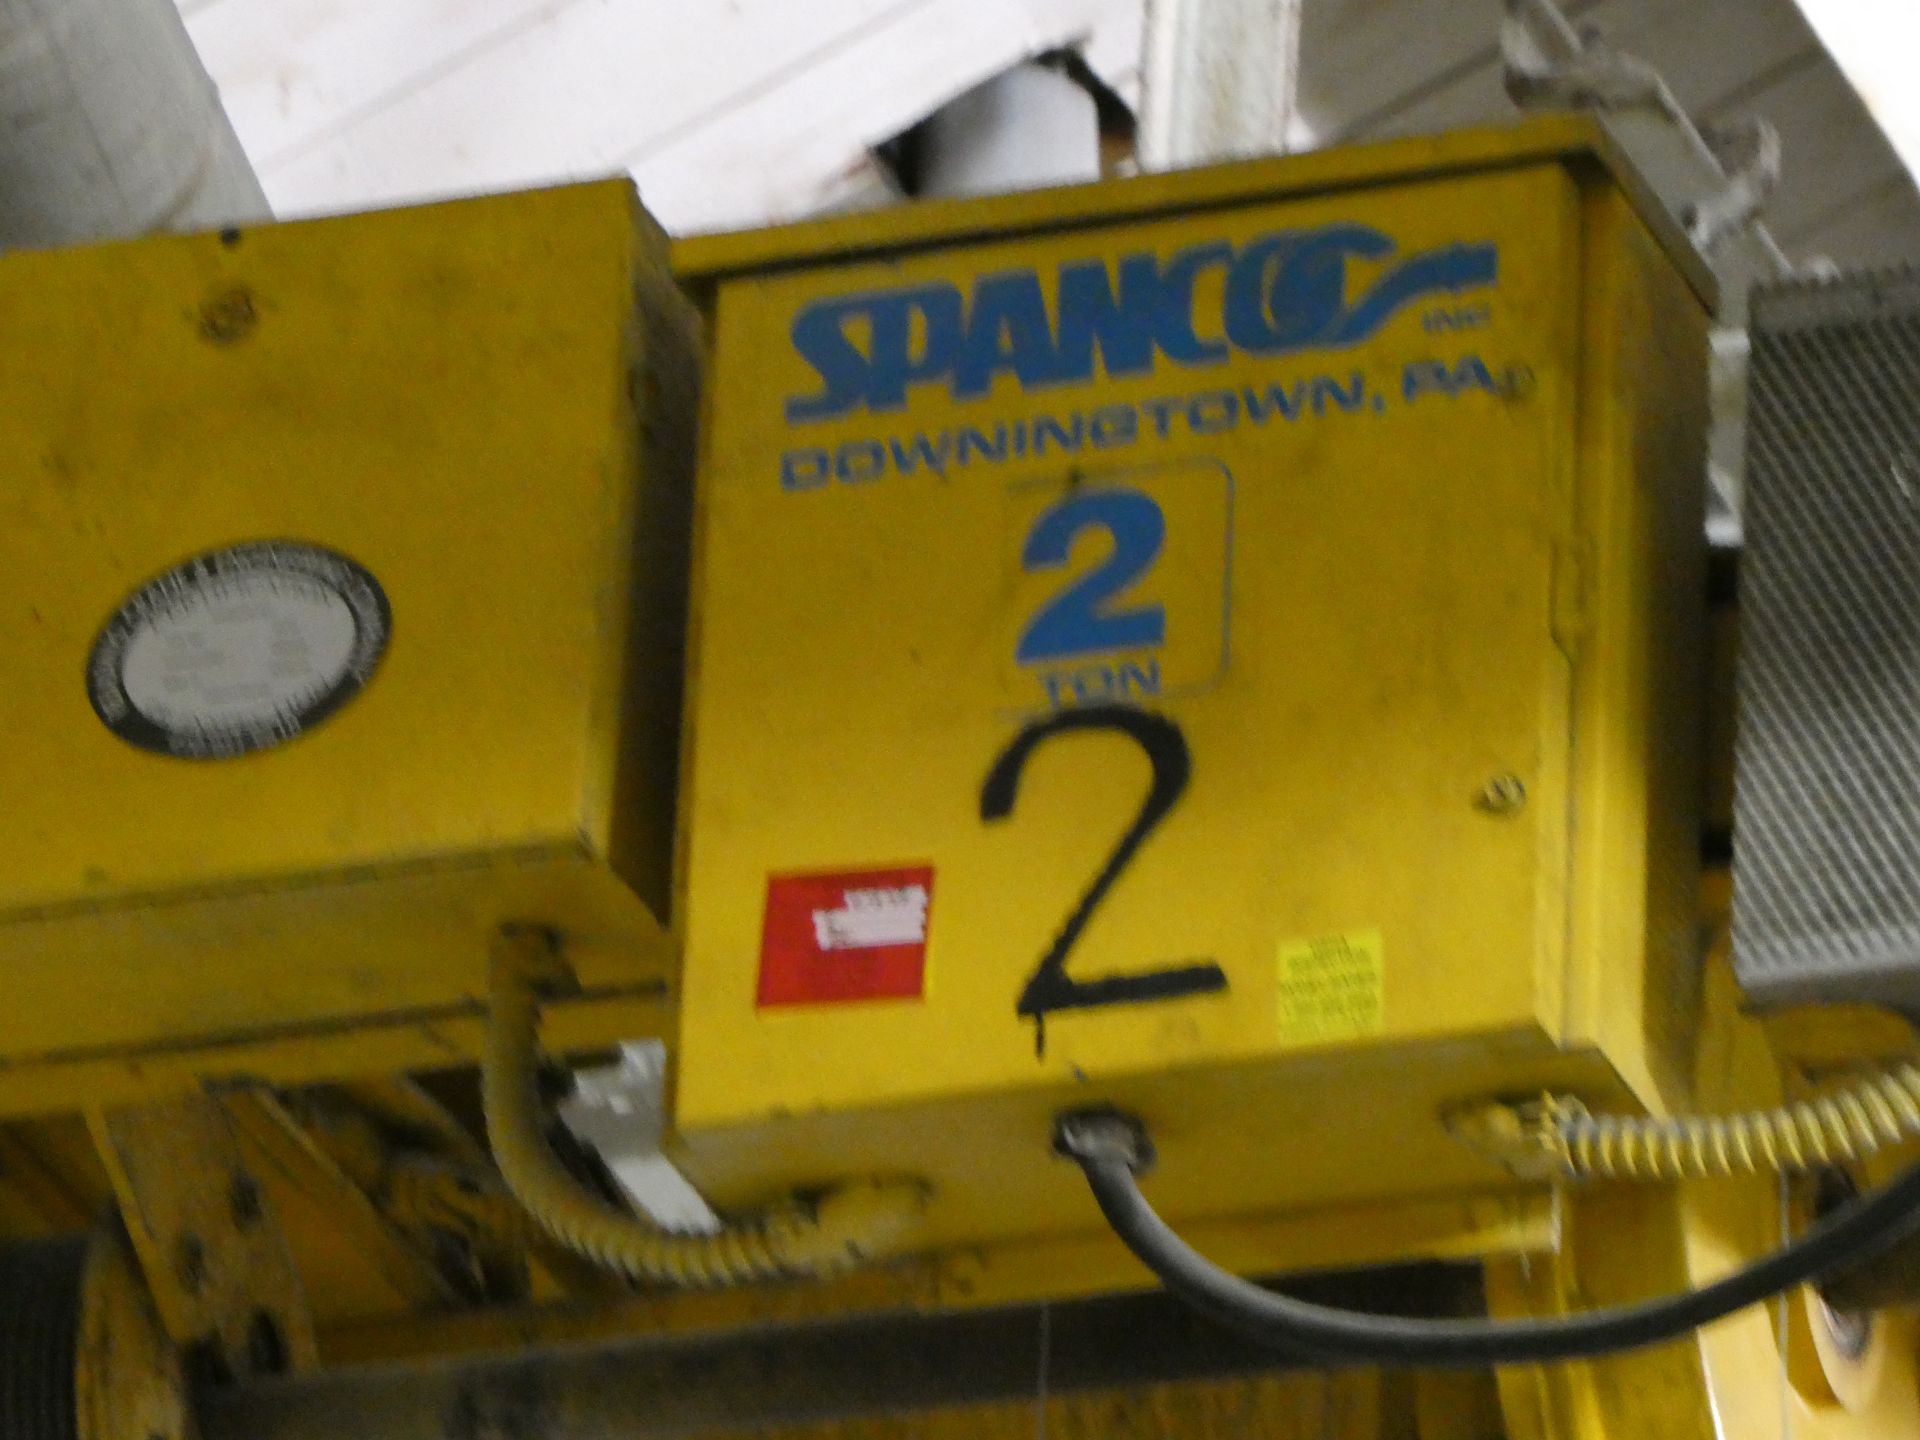 Spanco Overhead Crane System - Bild 2 aus 4